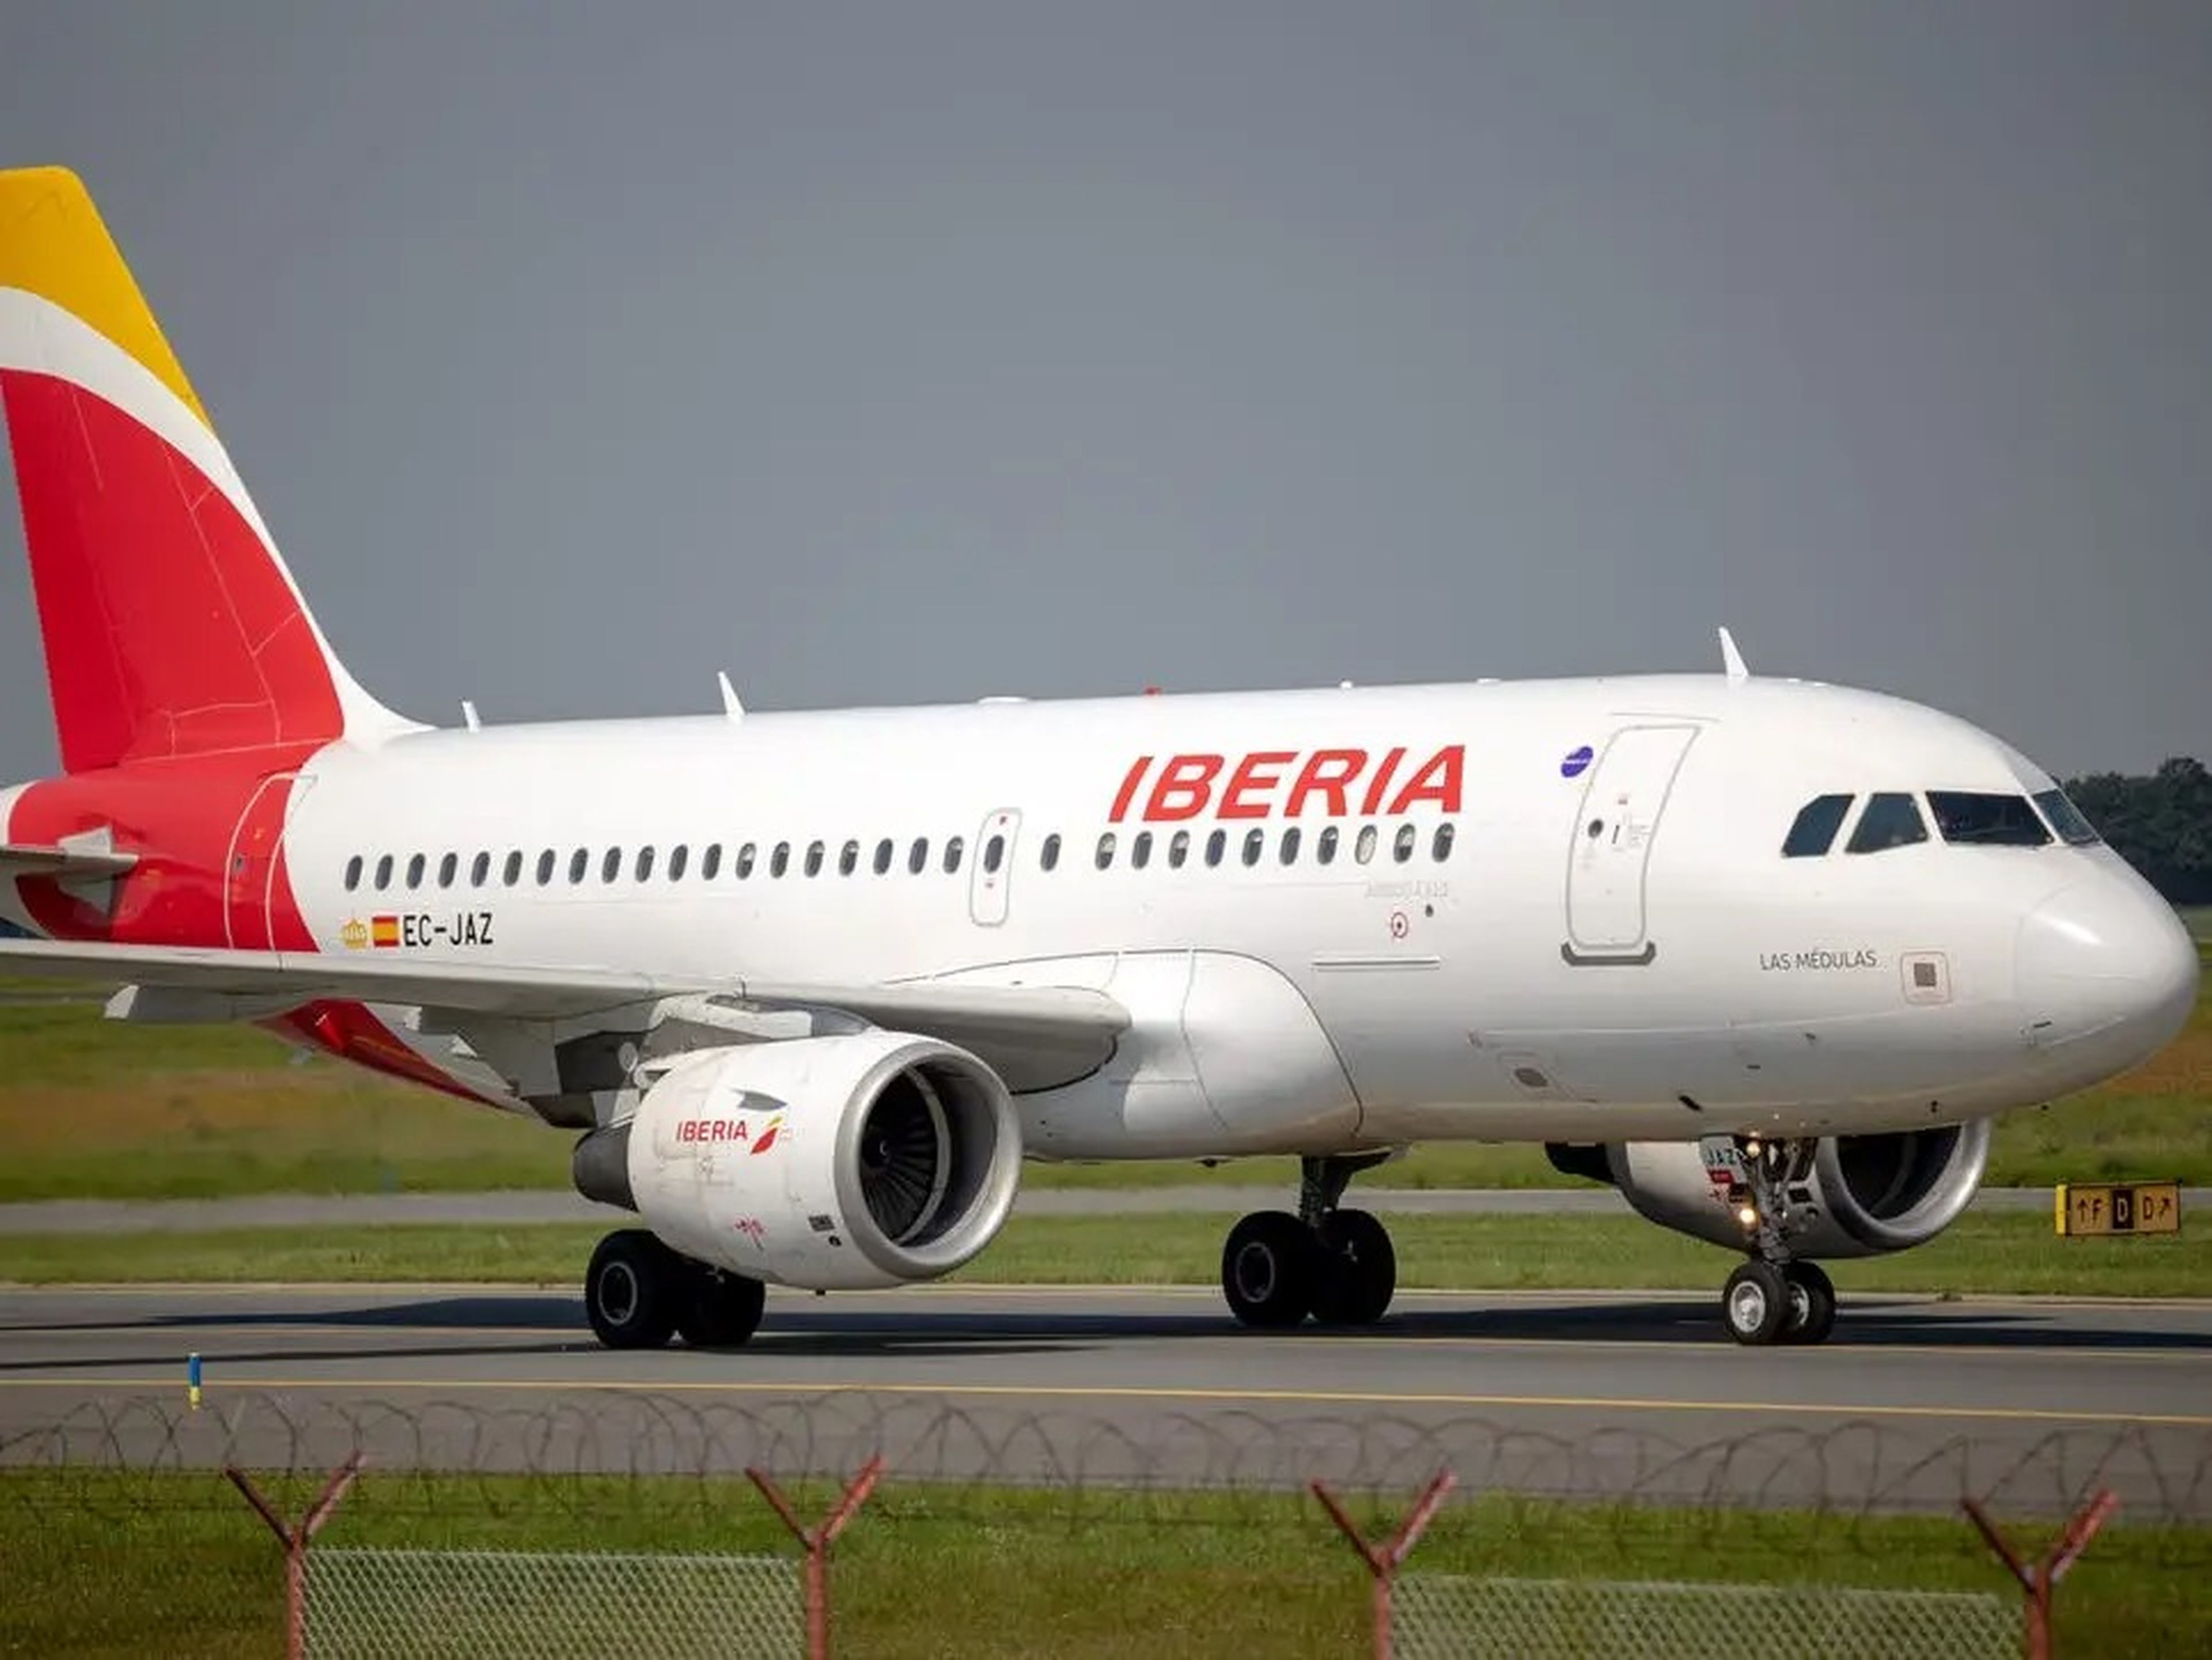 Iberia aircraft.